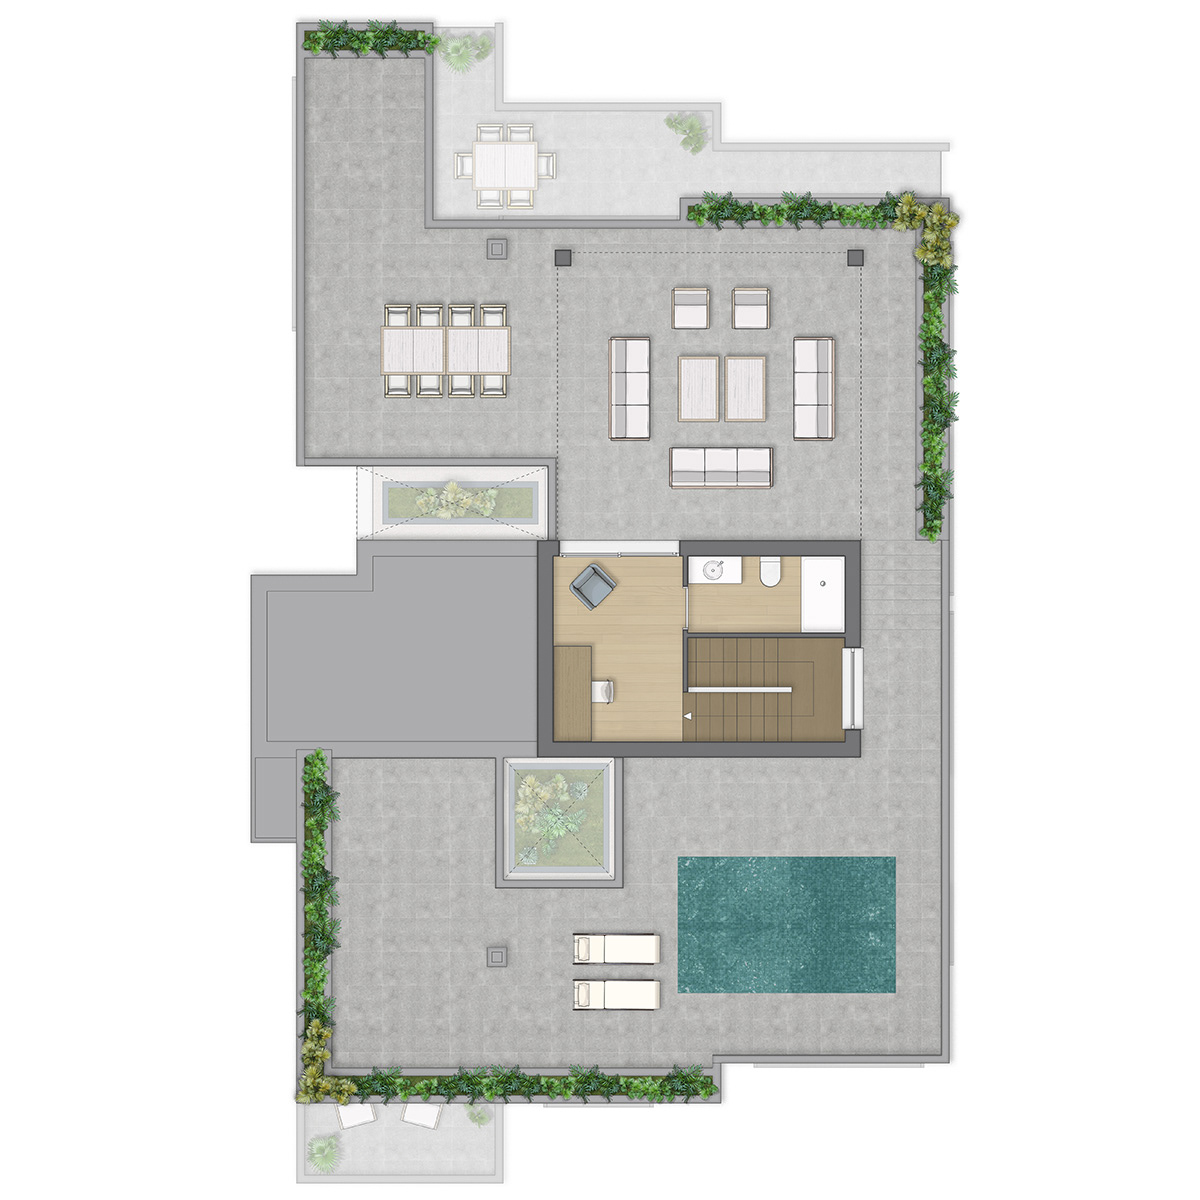 2D floor plan floorplan grundriss Plan plano Planta real estate rendering